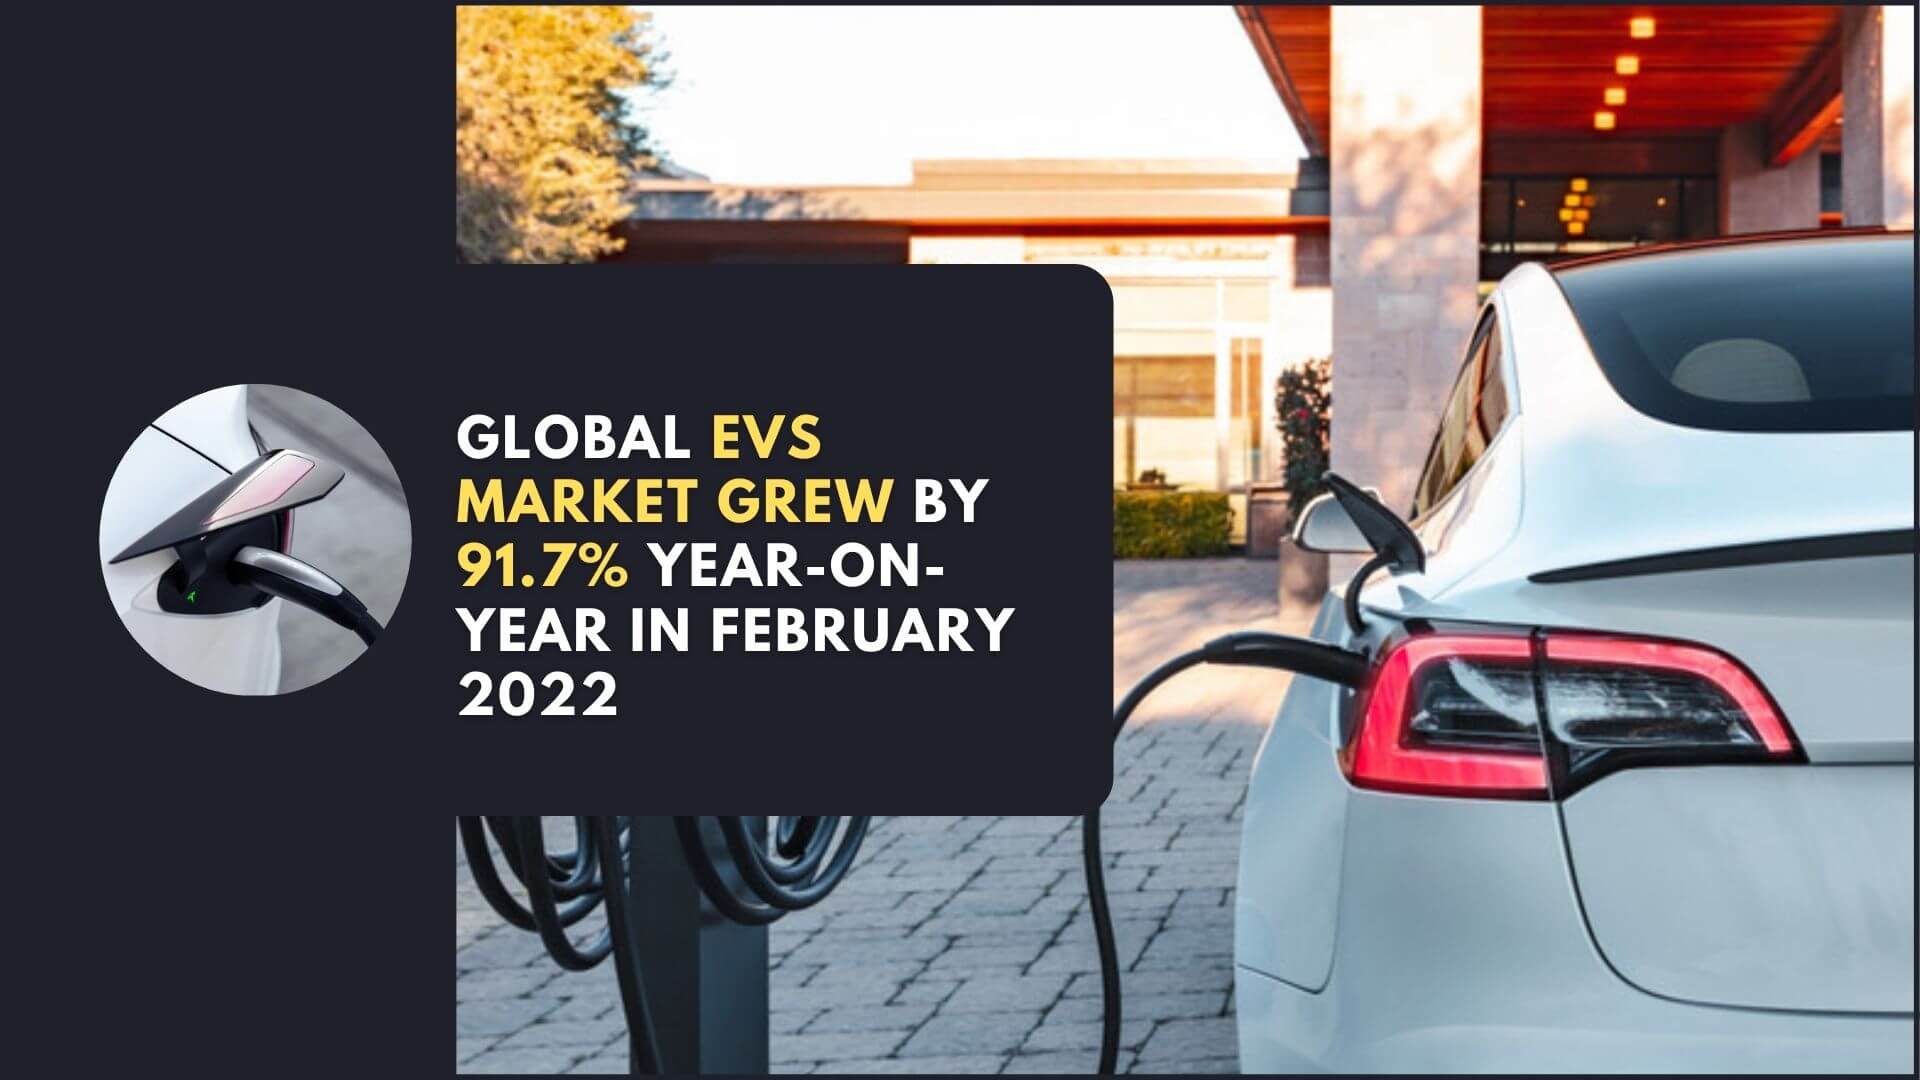 https://e-vehicleinfo.com/global-evs-market-grew-91-7-year-on-year-in-february-2022/